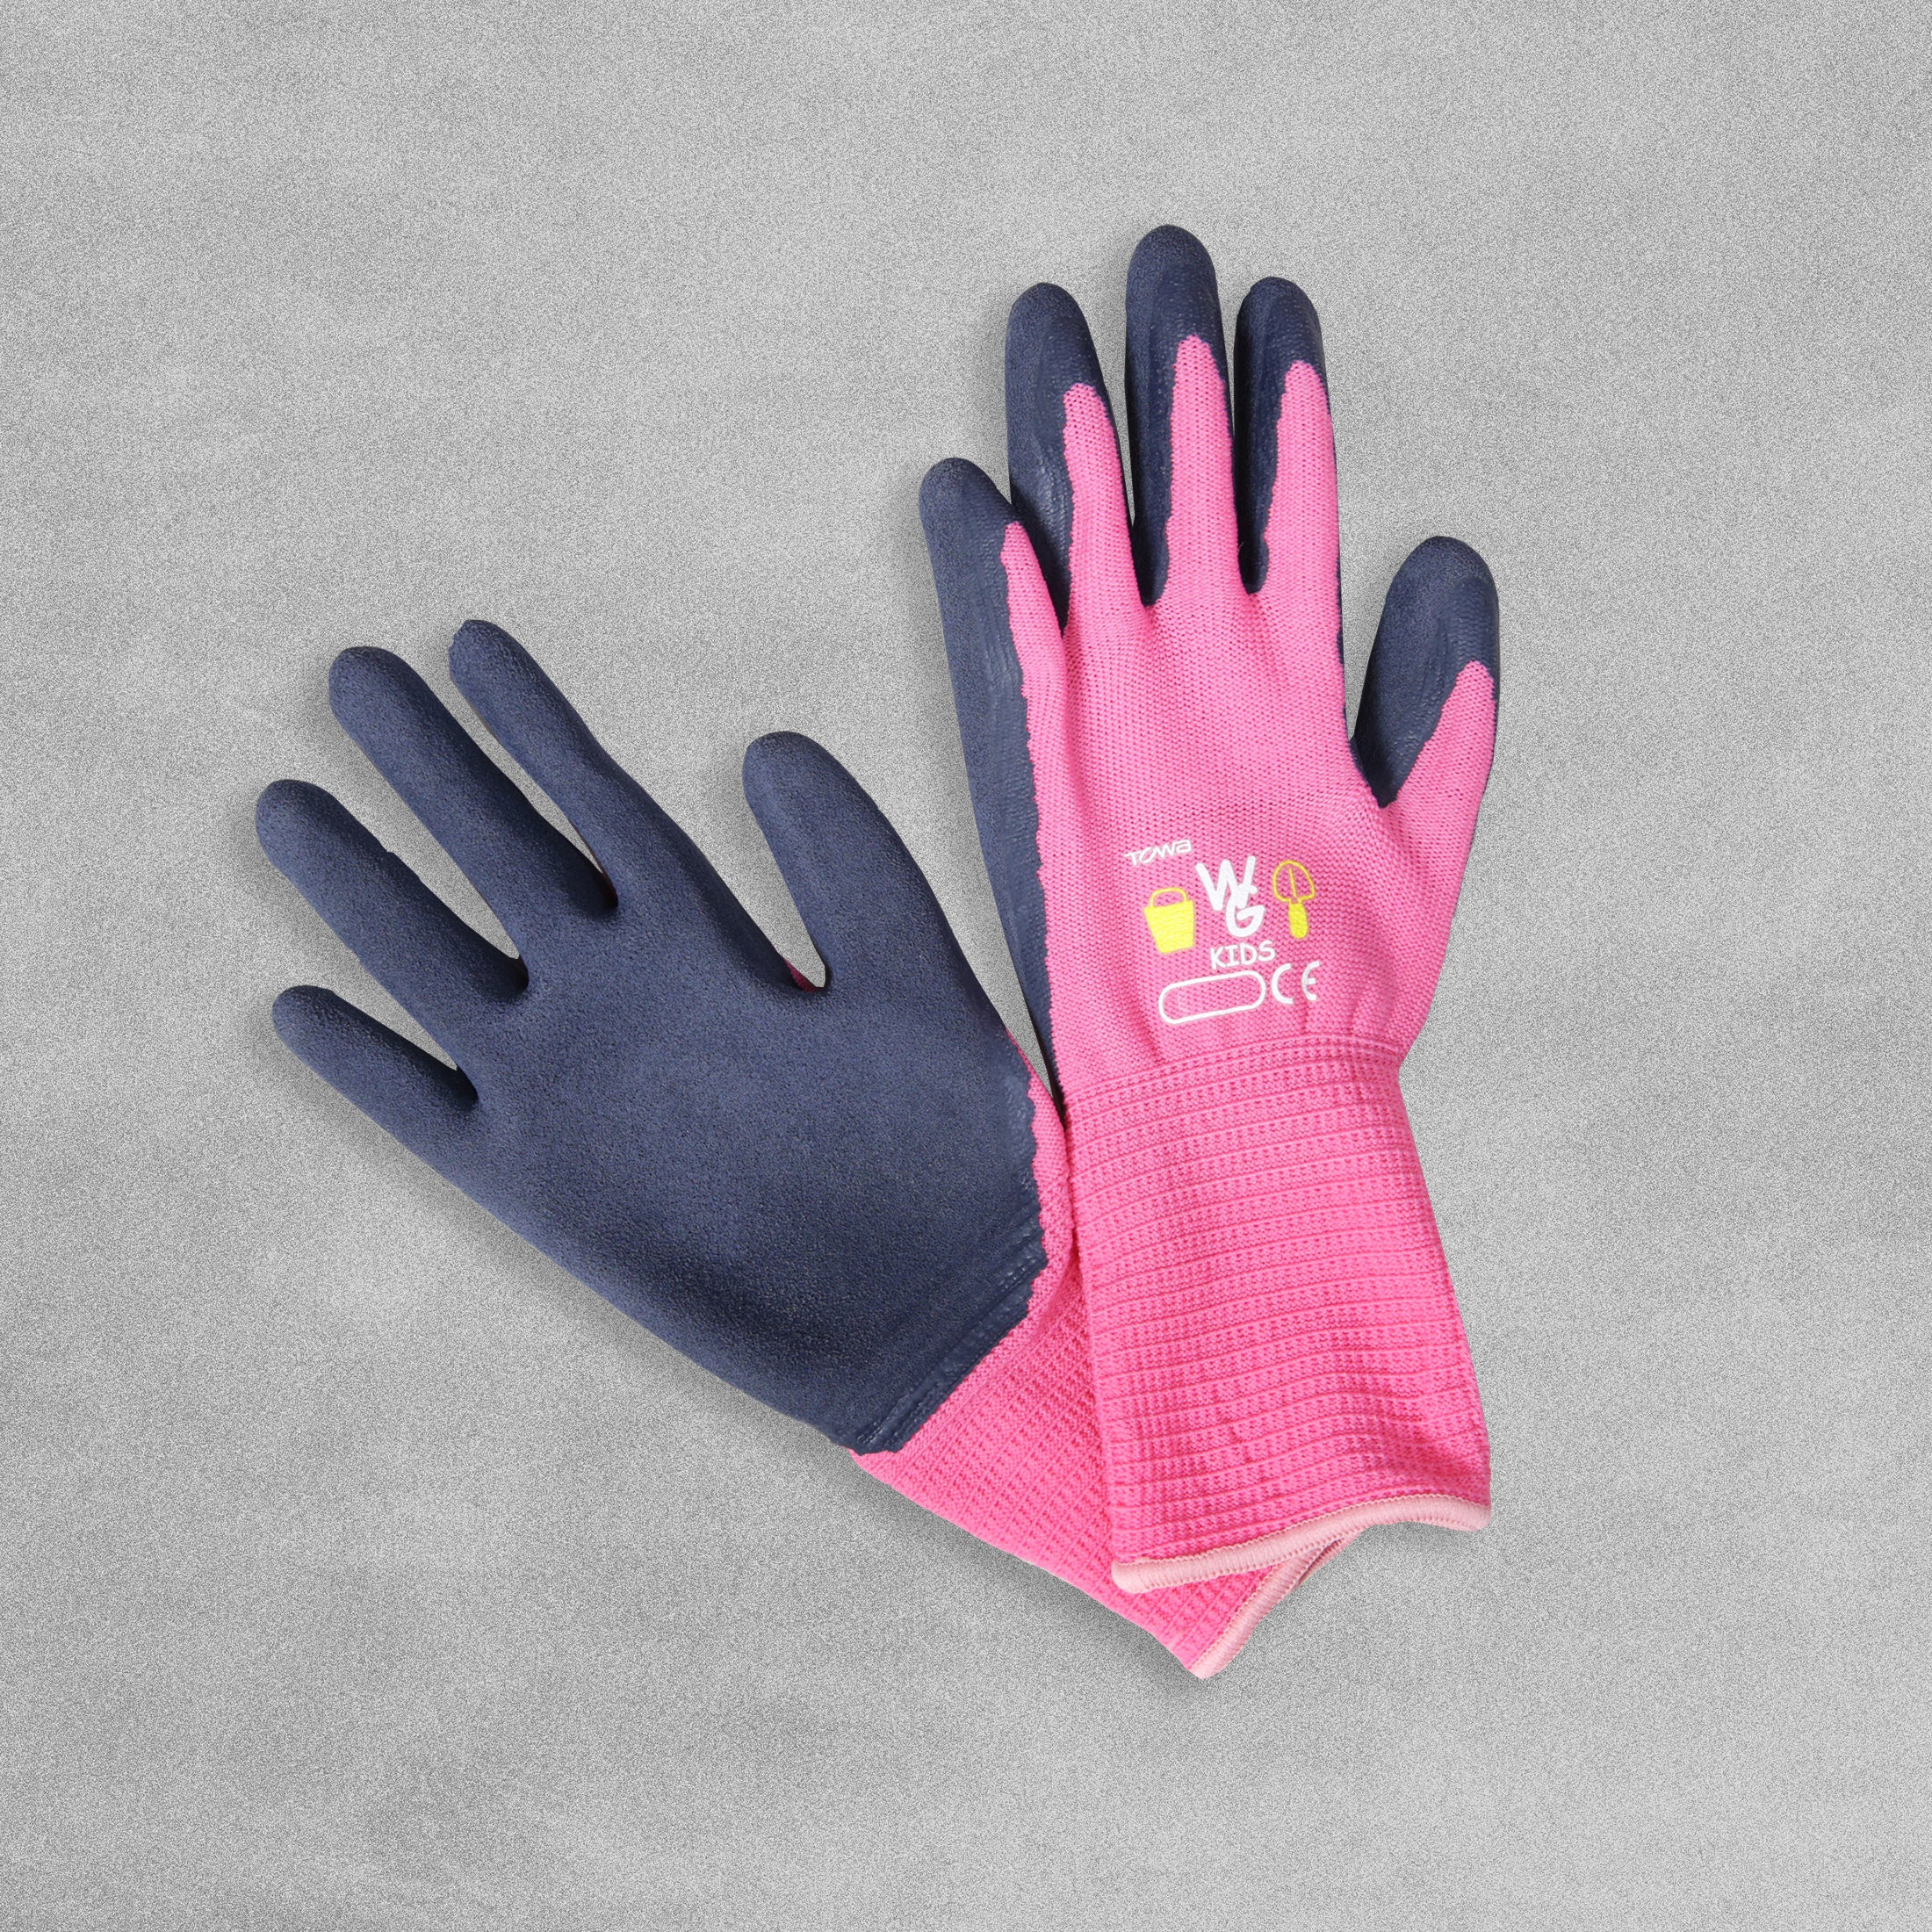 Soft n Care Garden gloves- Pink and Orange